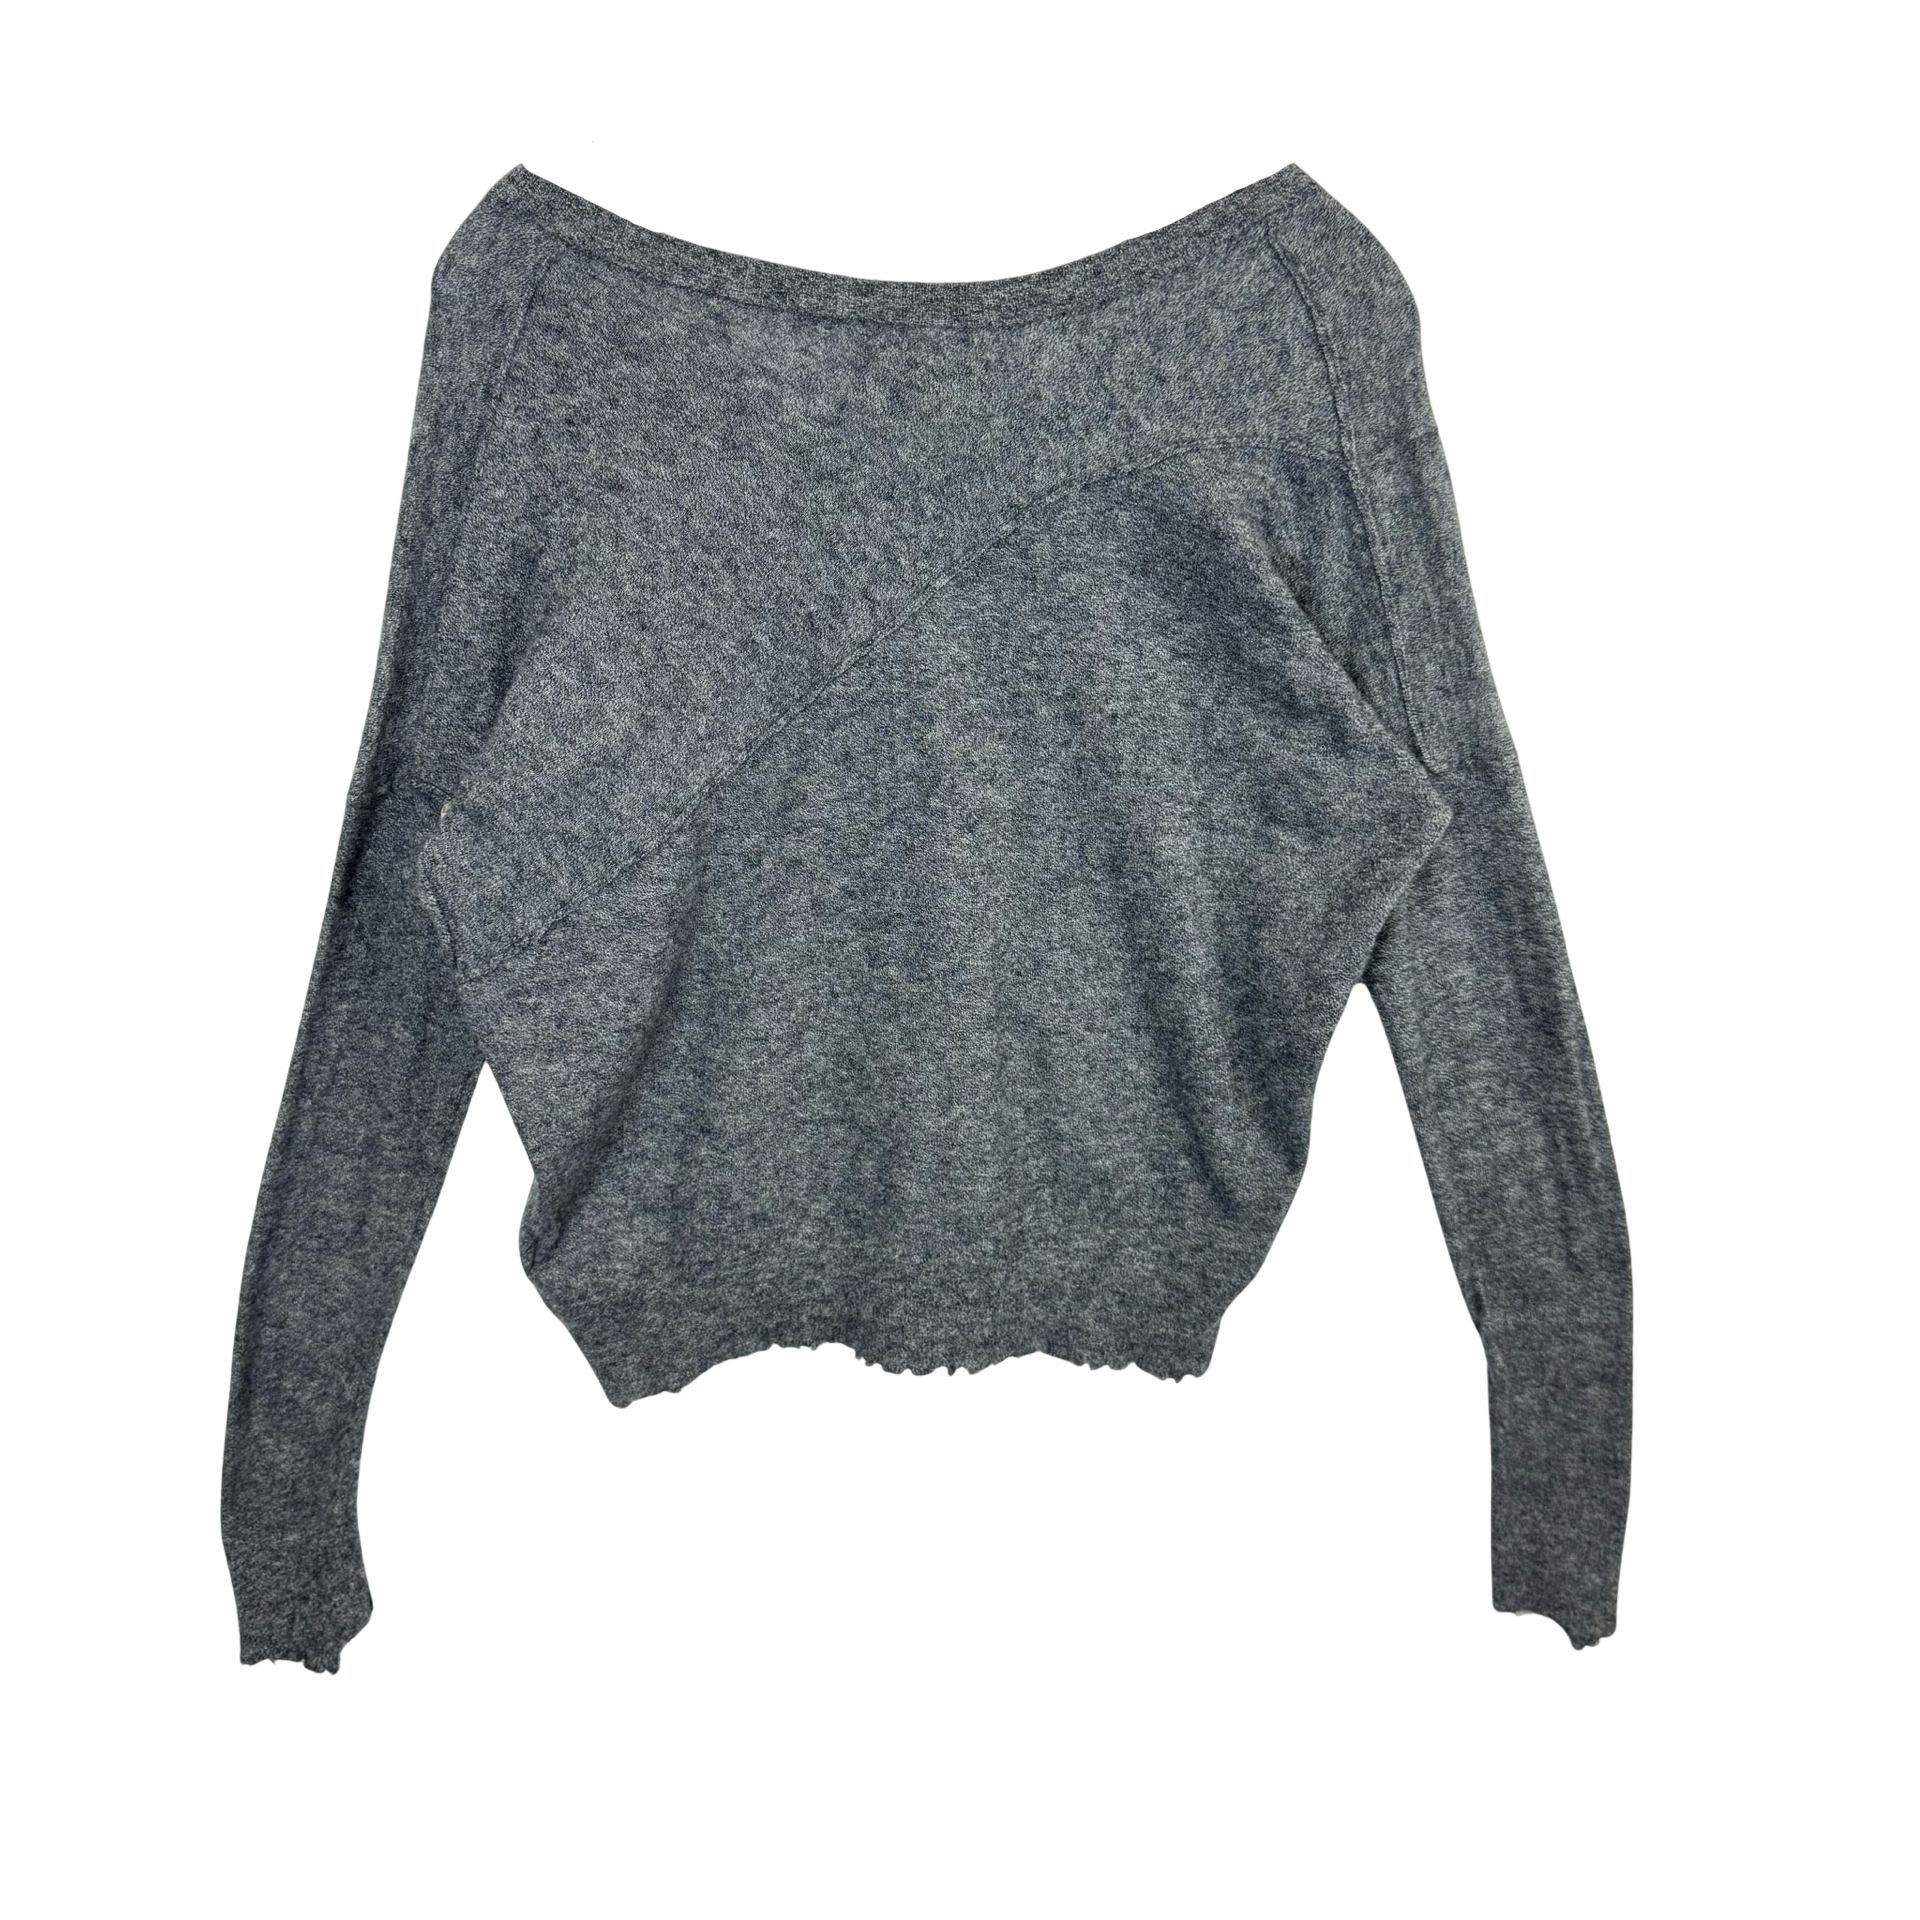 Zadig & Voltaire Lightweight Distressed Cashmere Sweater